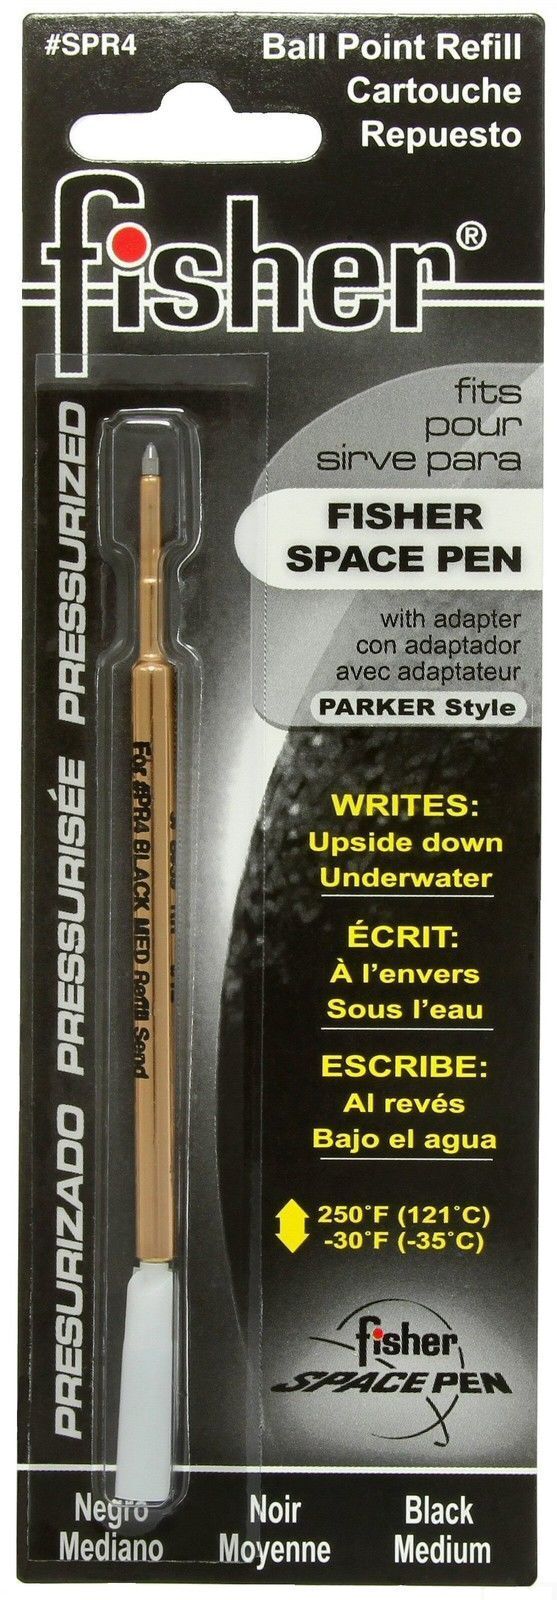 Fisher Space Pen - Refills - SPR4 Pressurized Cartridge - Black Ink - Medium